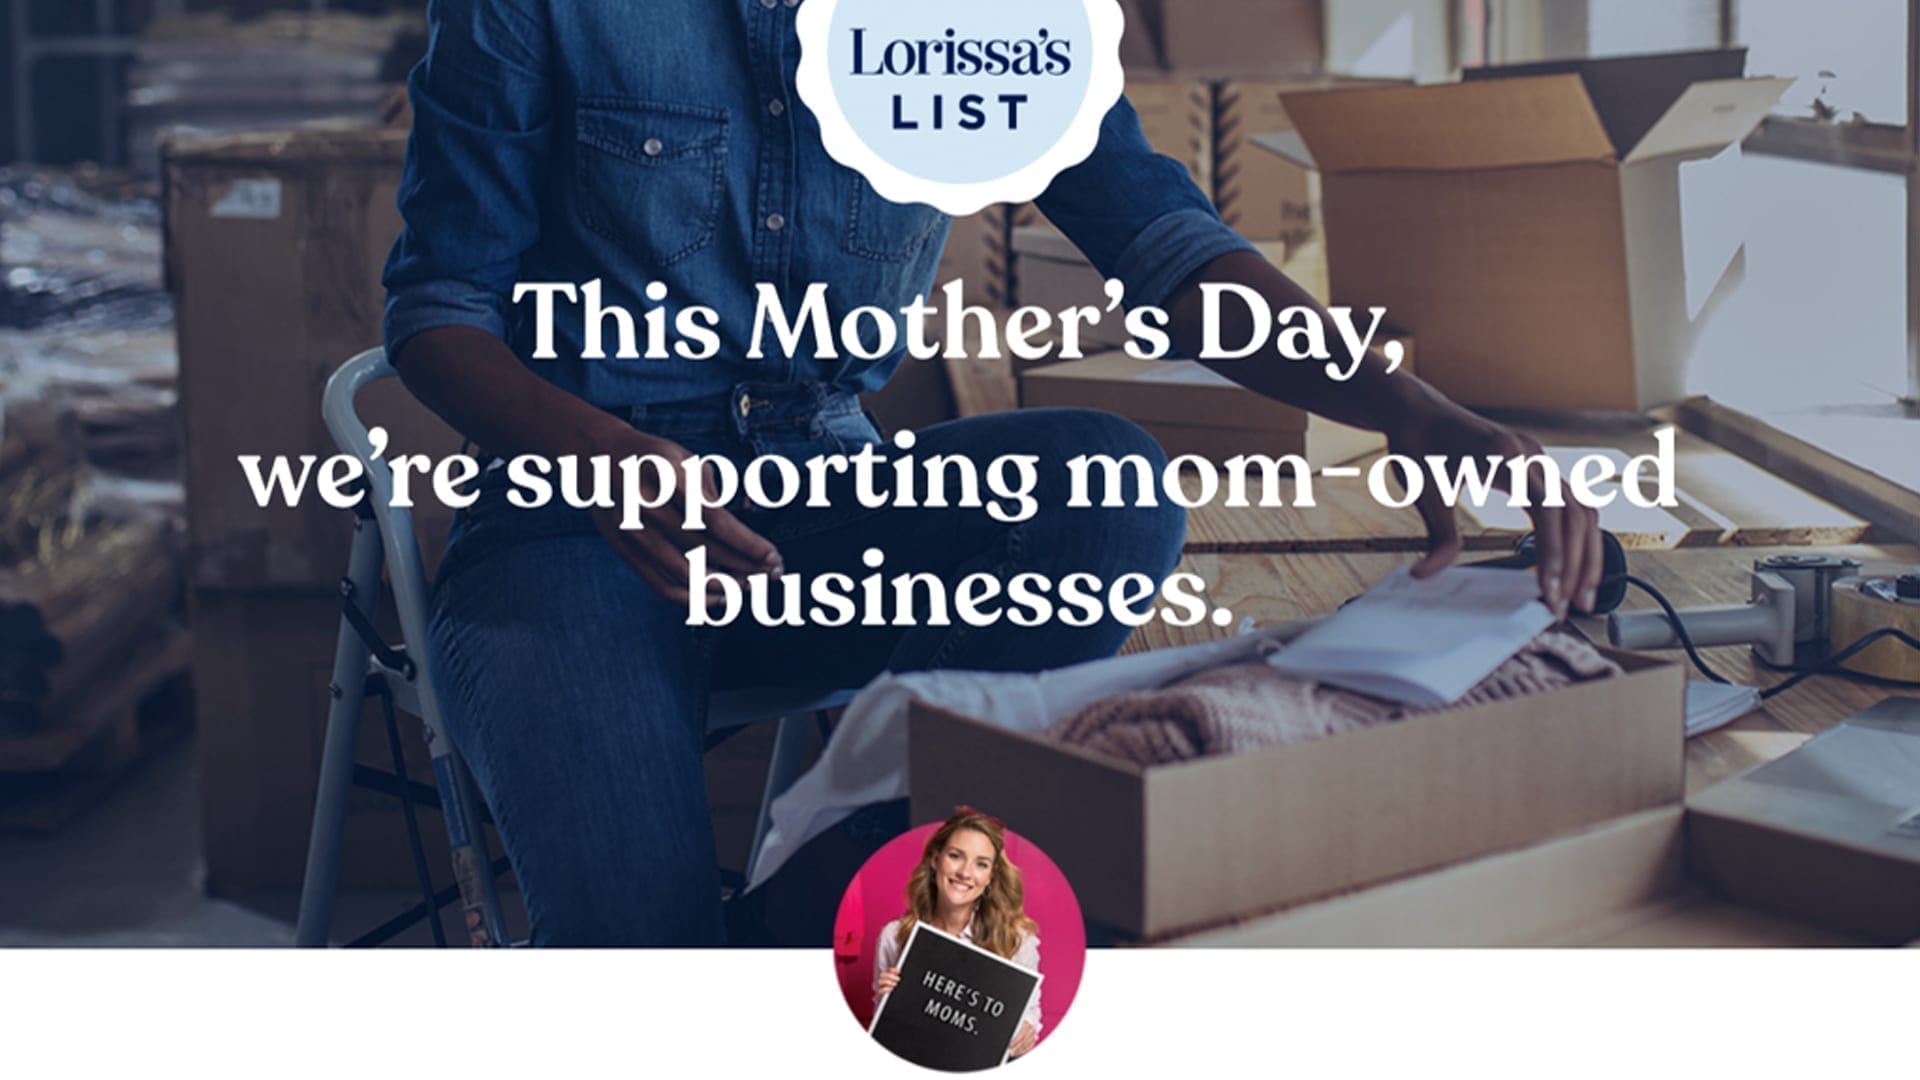 Marketing to moms